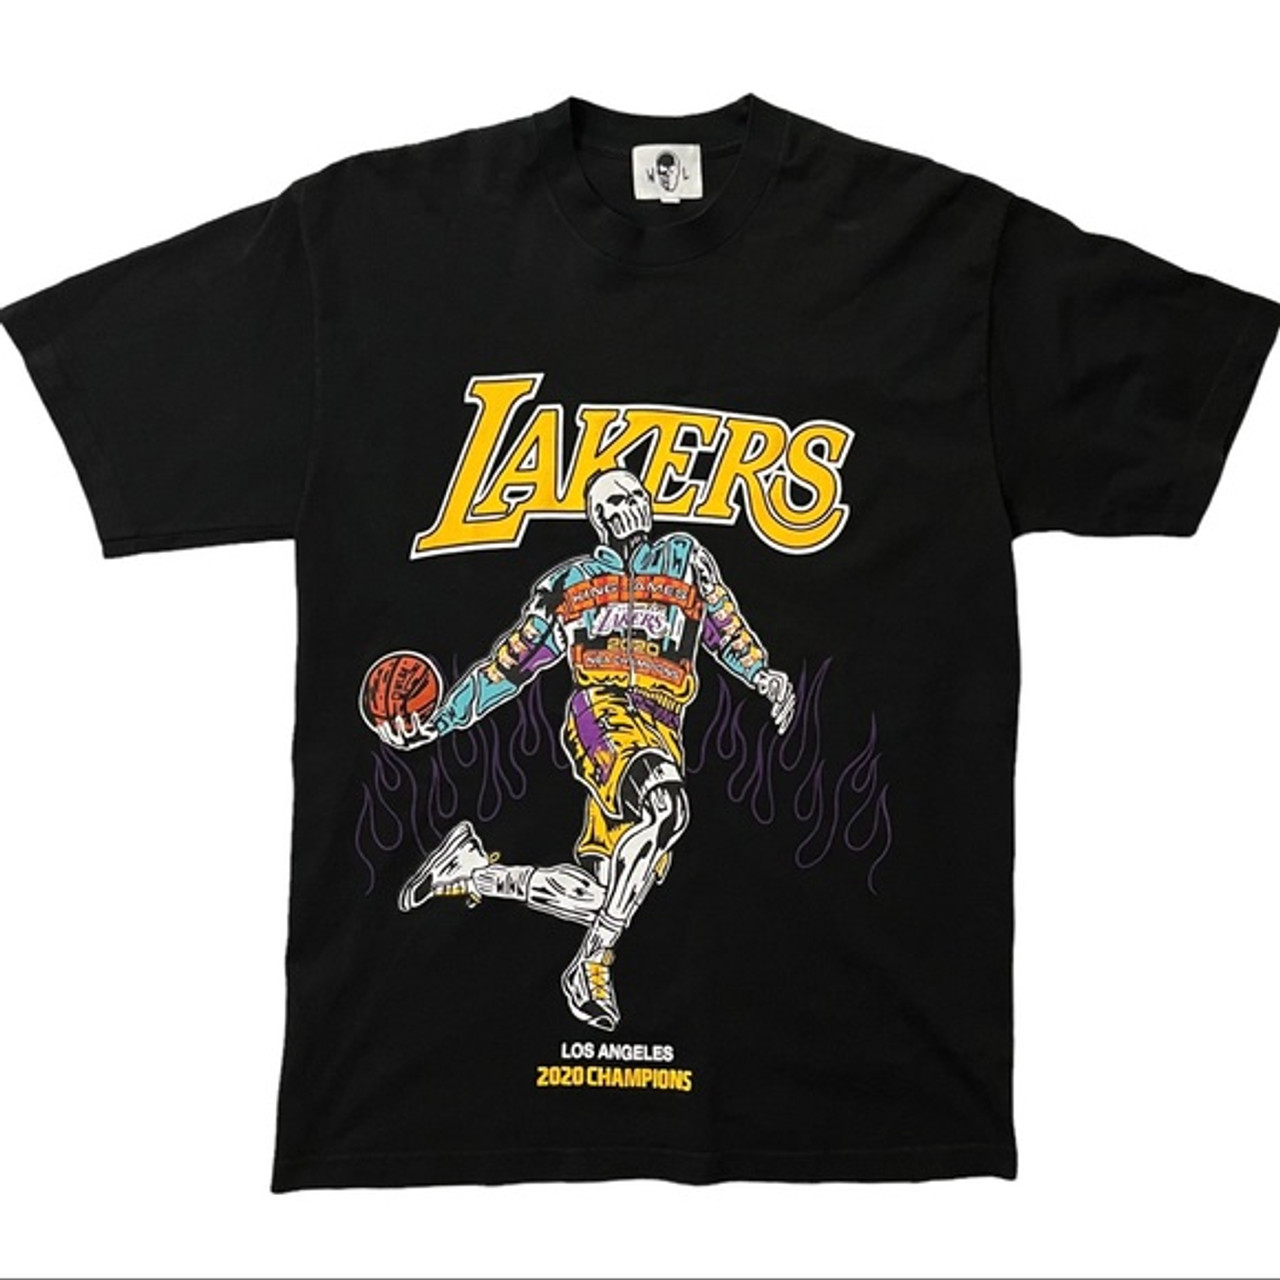 Warren Lotas x Los Angeles Lakers Champion Tee Black - ENDANGERED LA